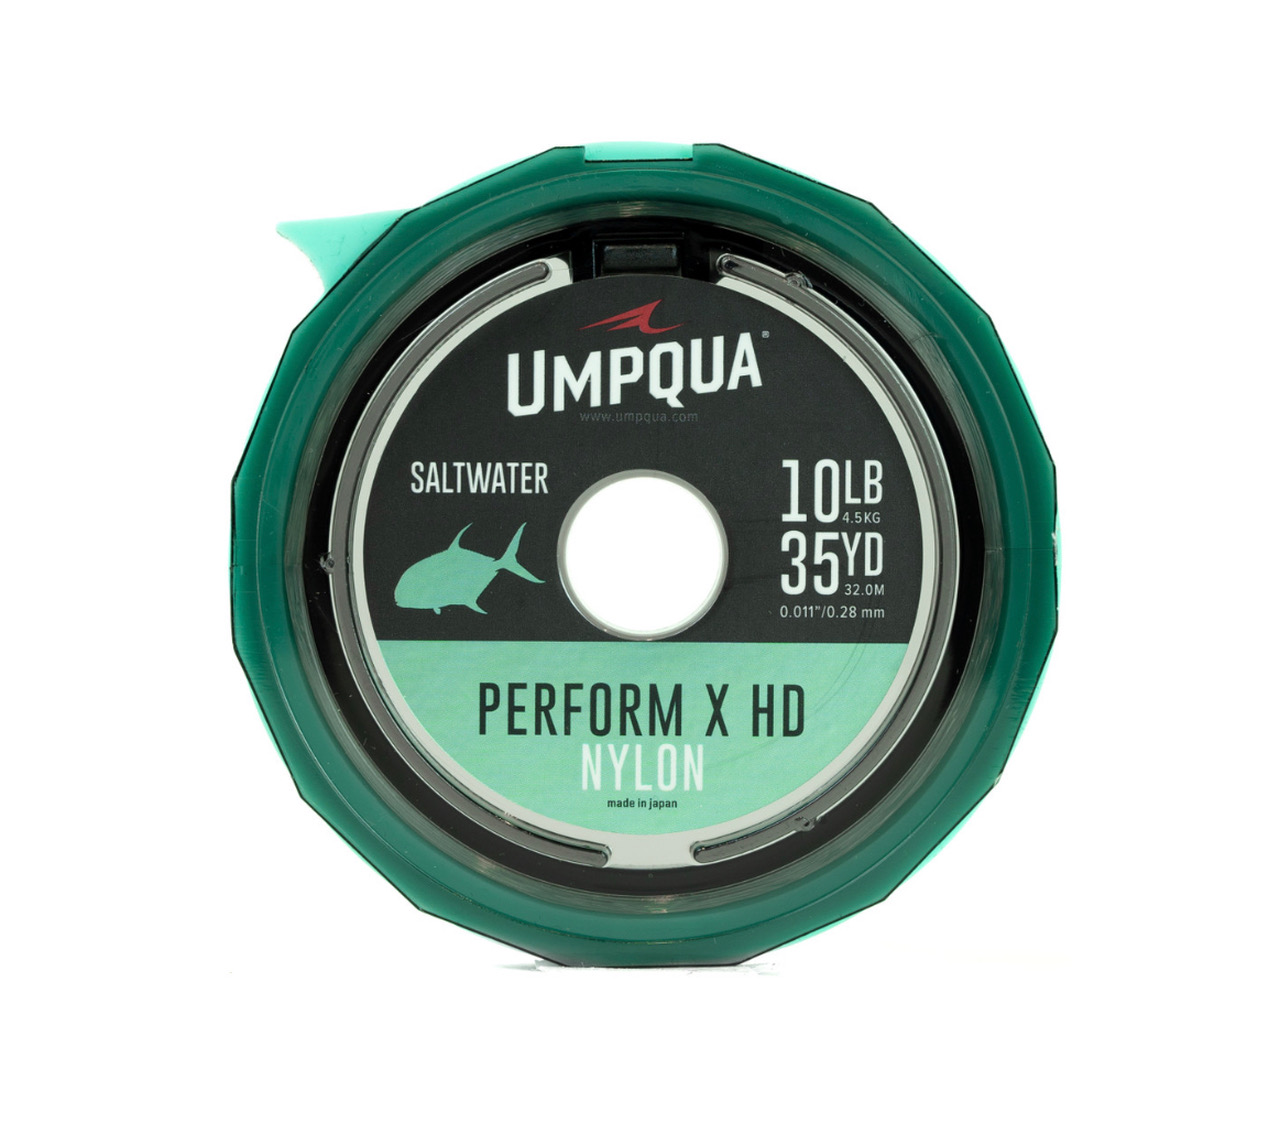 Umpqua Perform X HD Saltwater Nylon Tippet - 25yd - 25lb